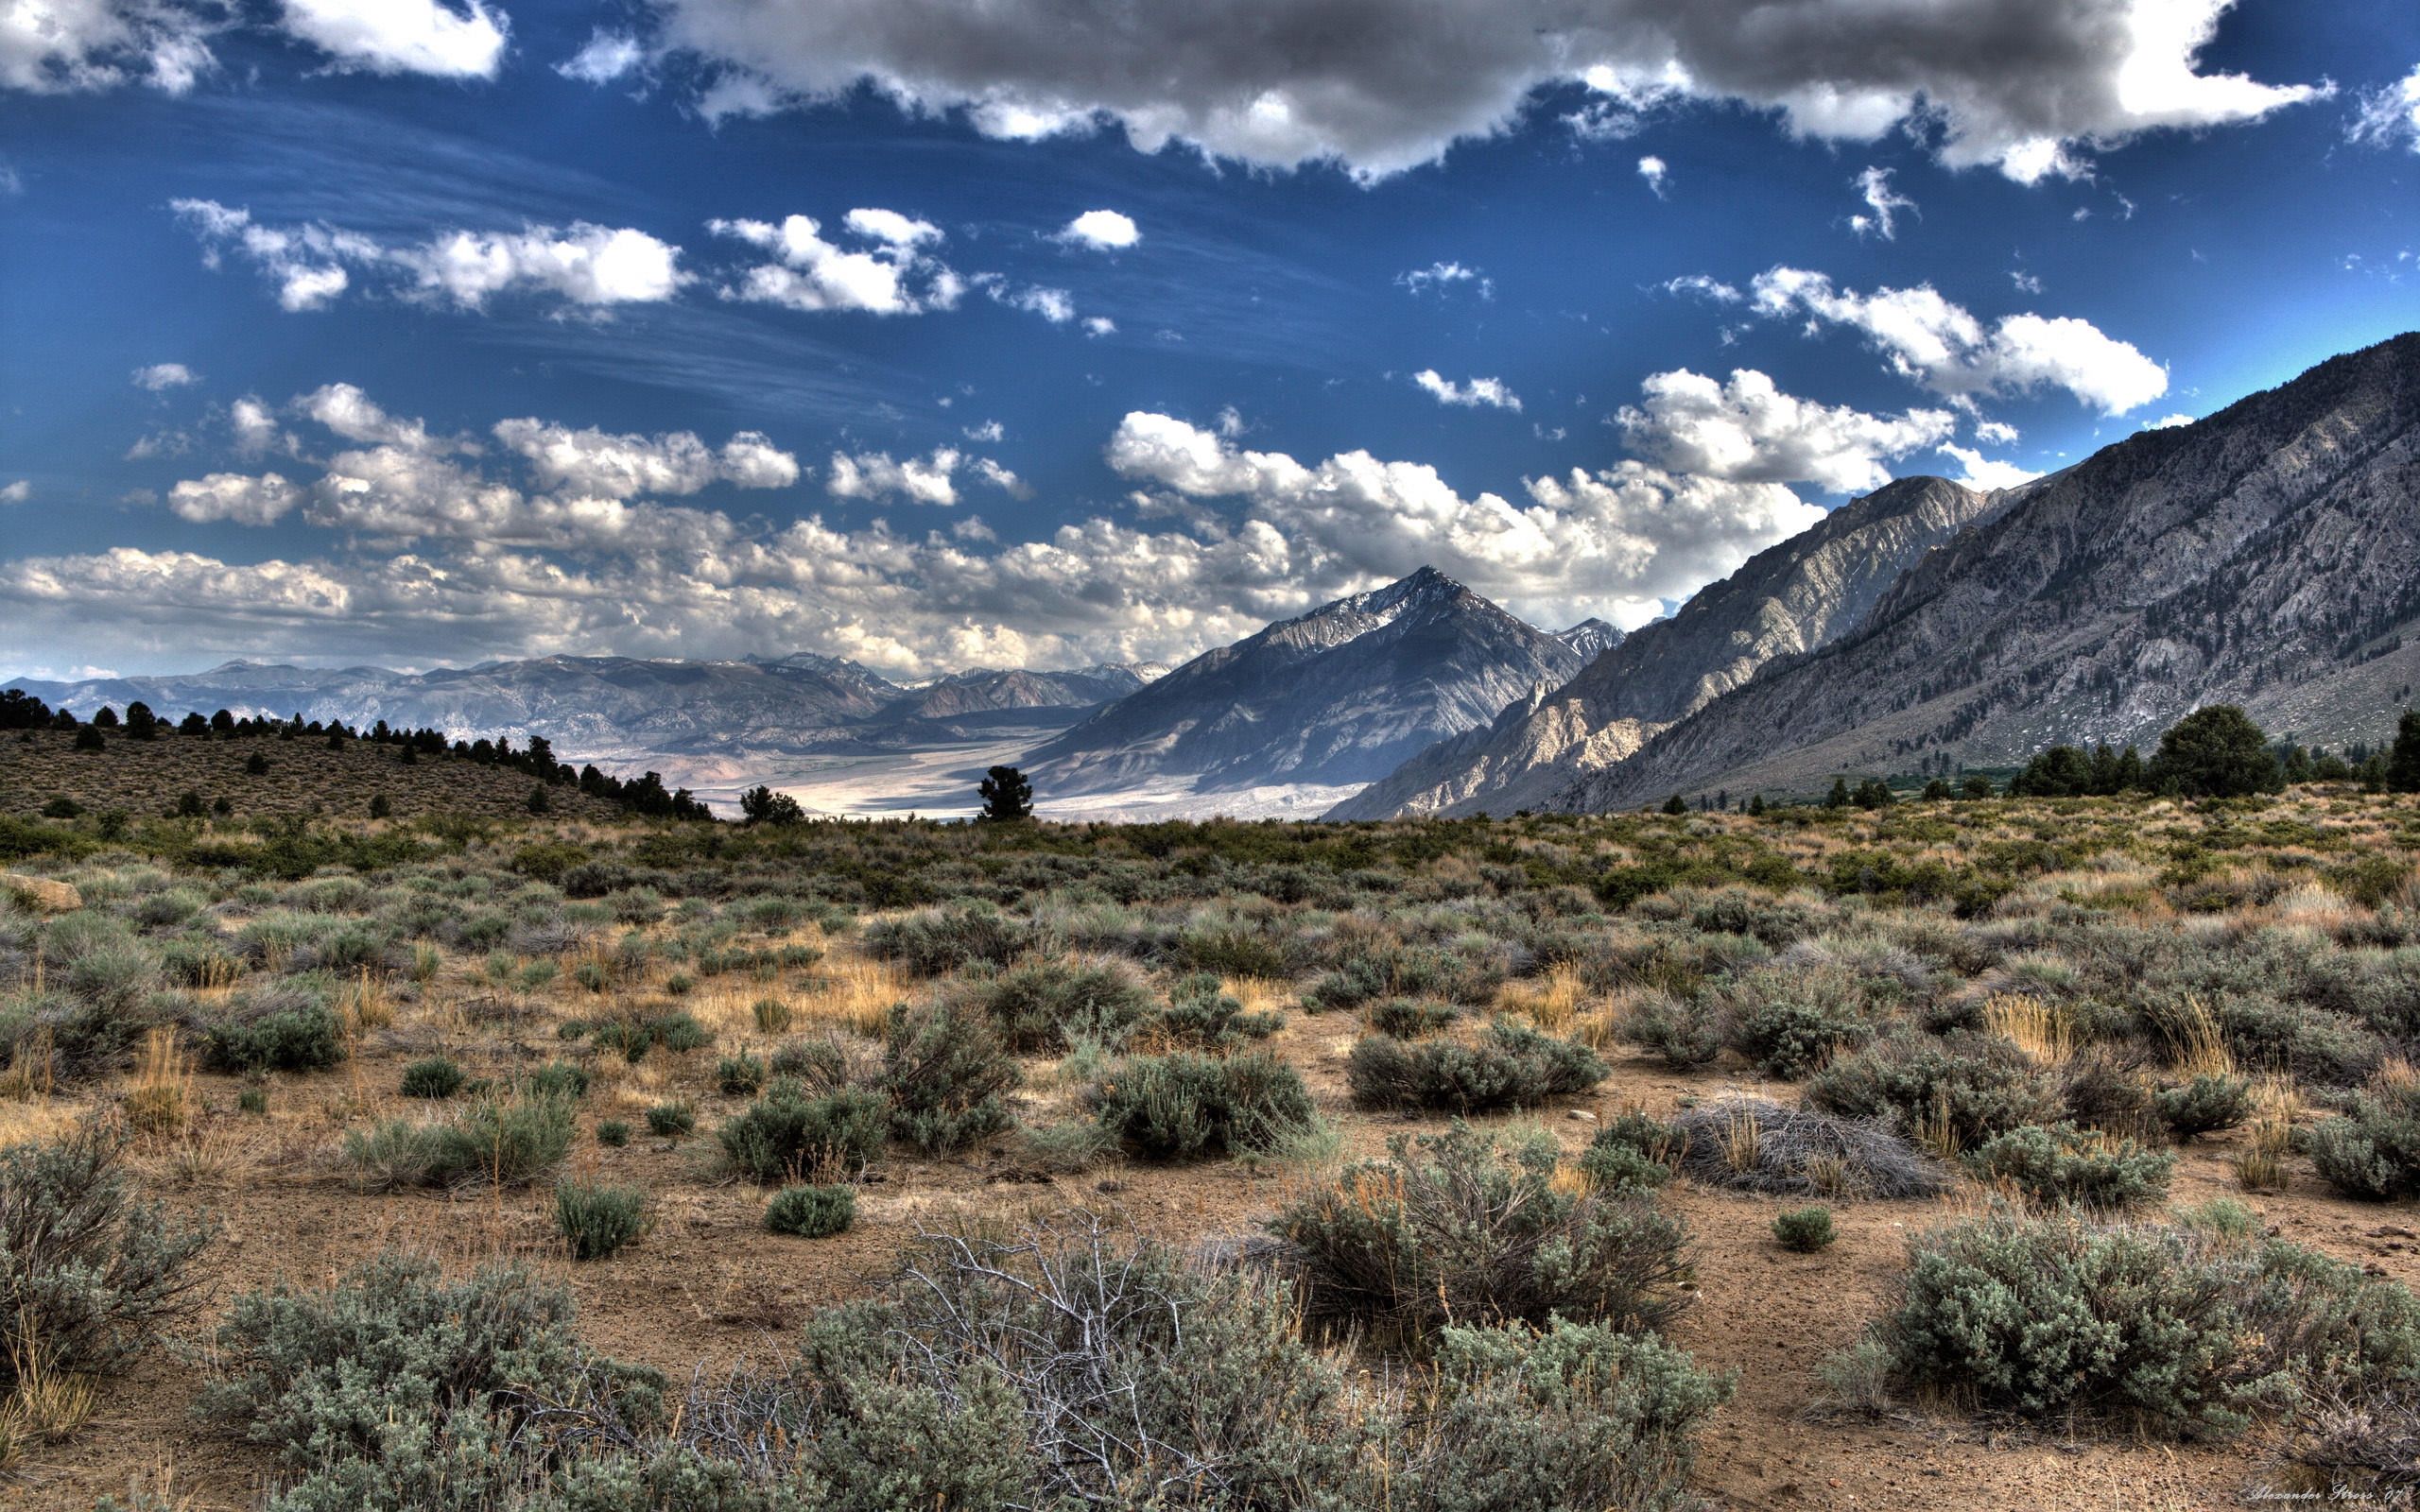 PCデスクトップに自然, 山脈, 砂漠, 植生, 雲画像を無料でダウンロード